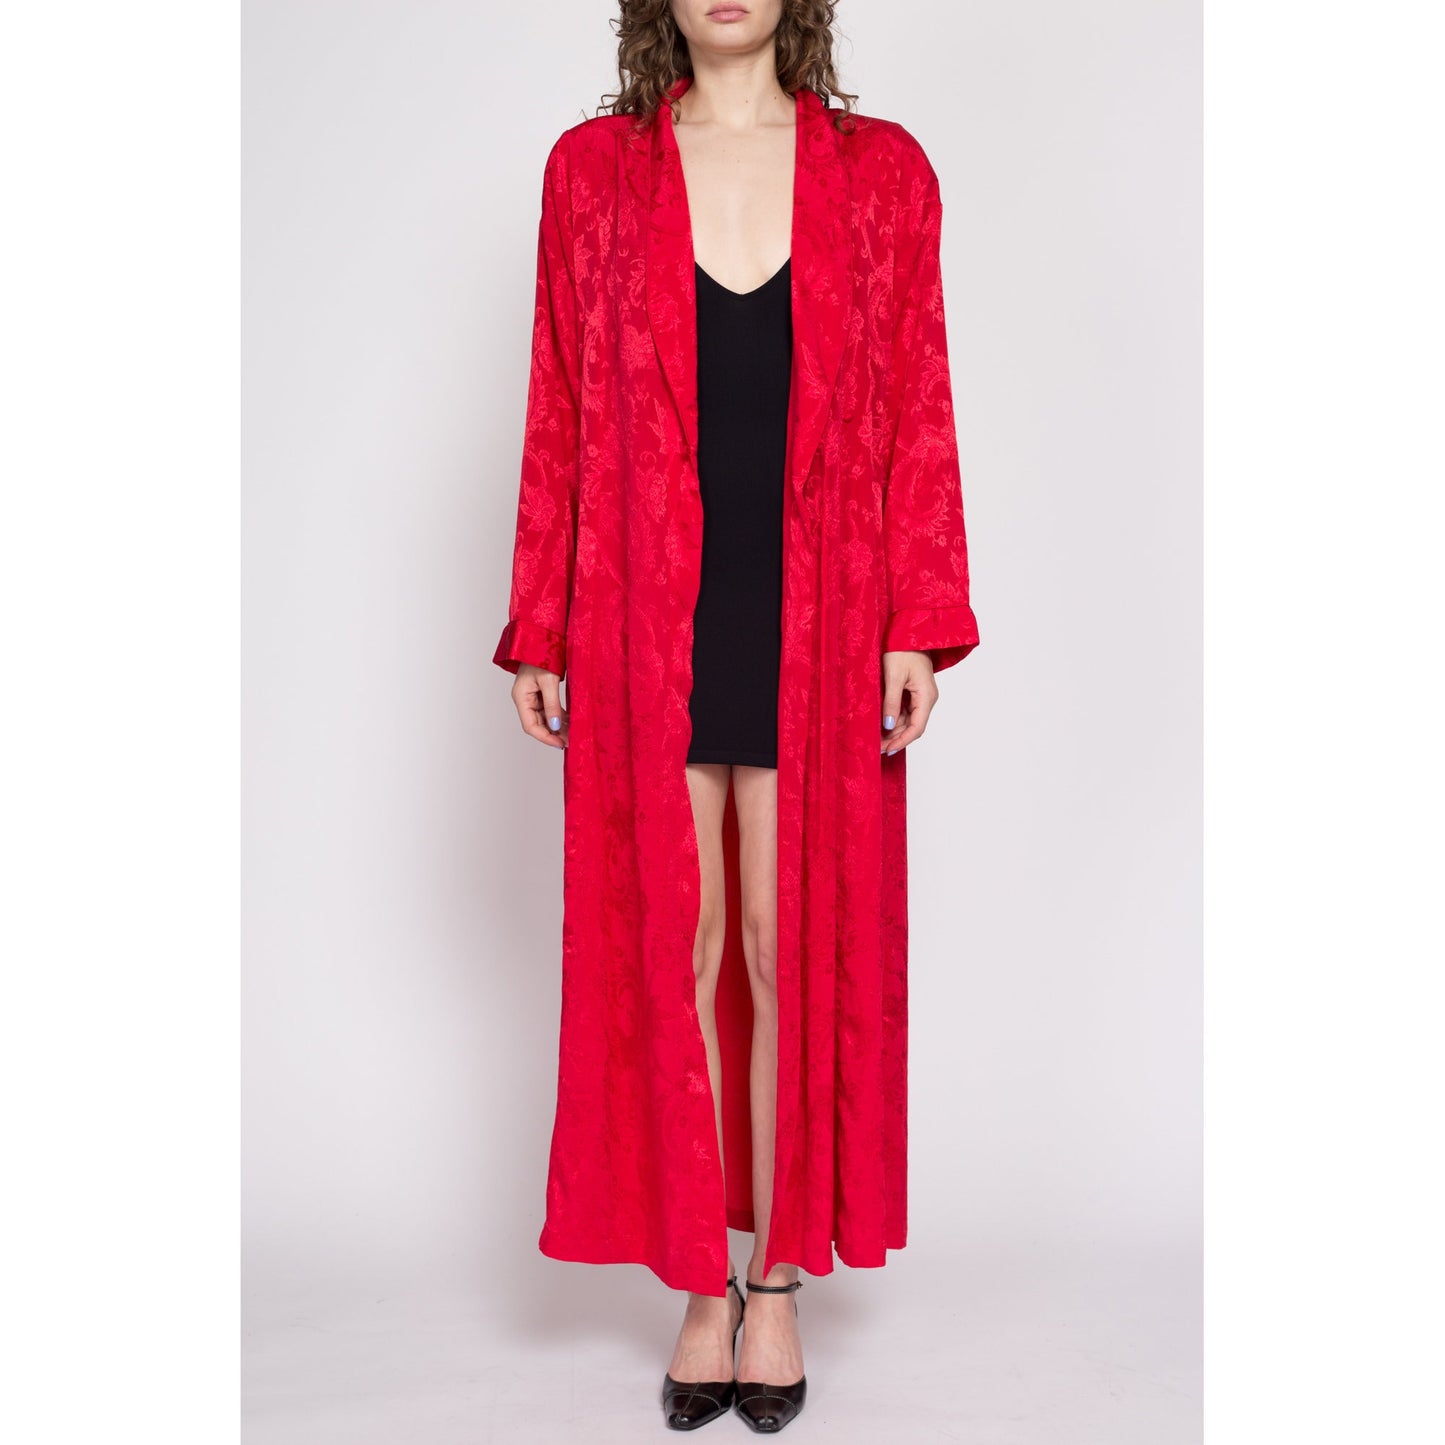 90s Victoria's Secret Red Jacquard Satin Robe - Medium to Large